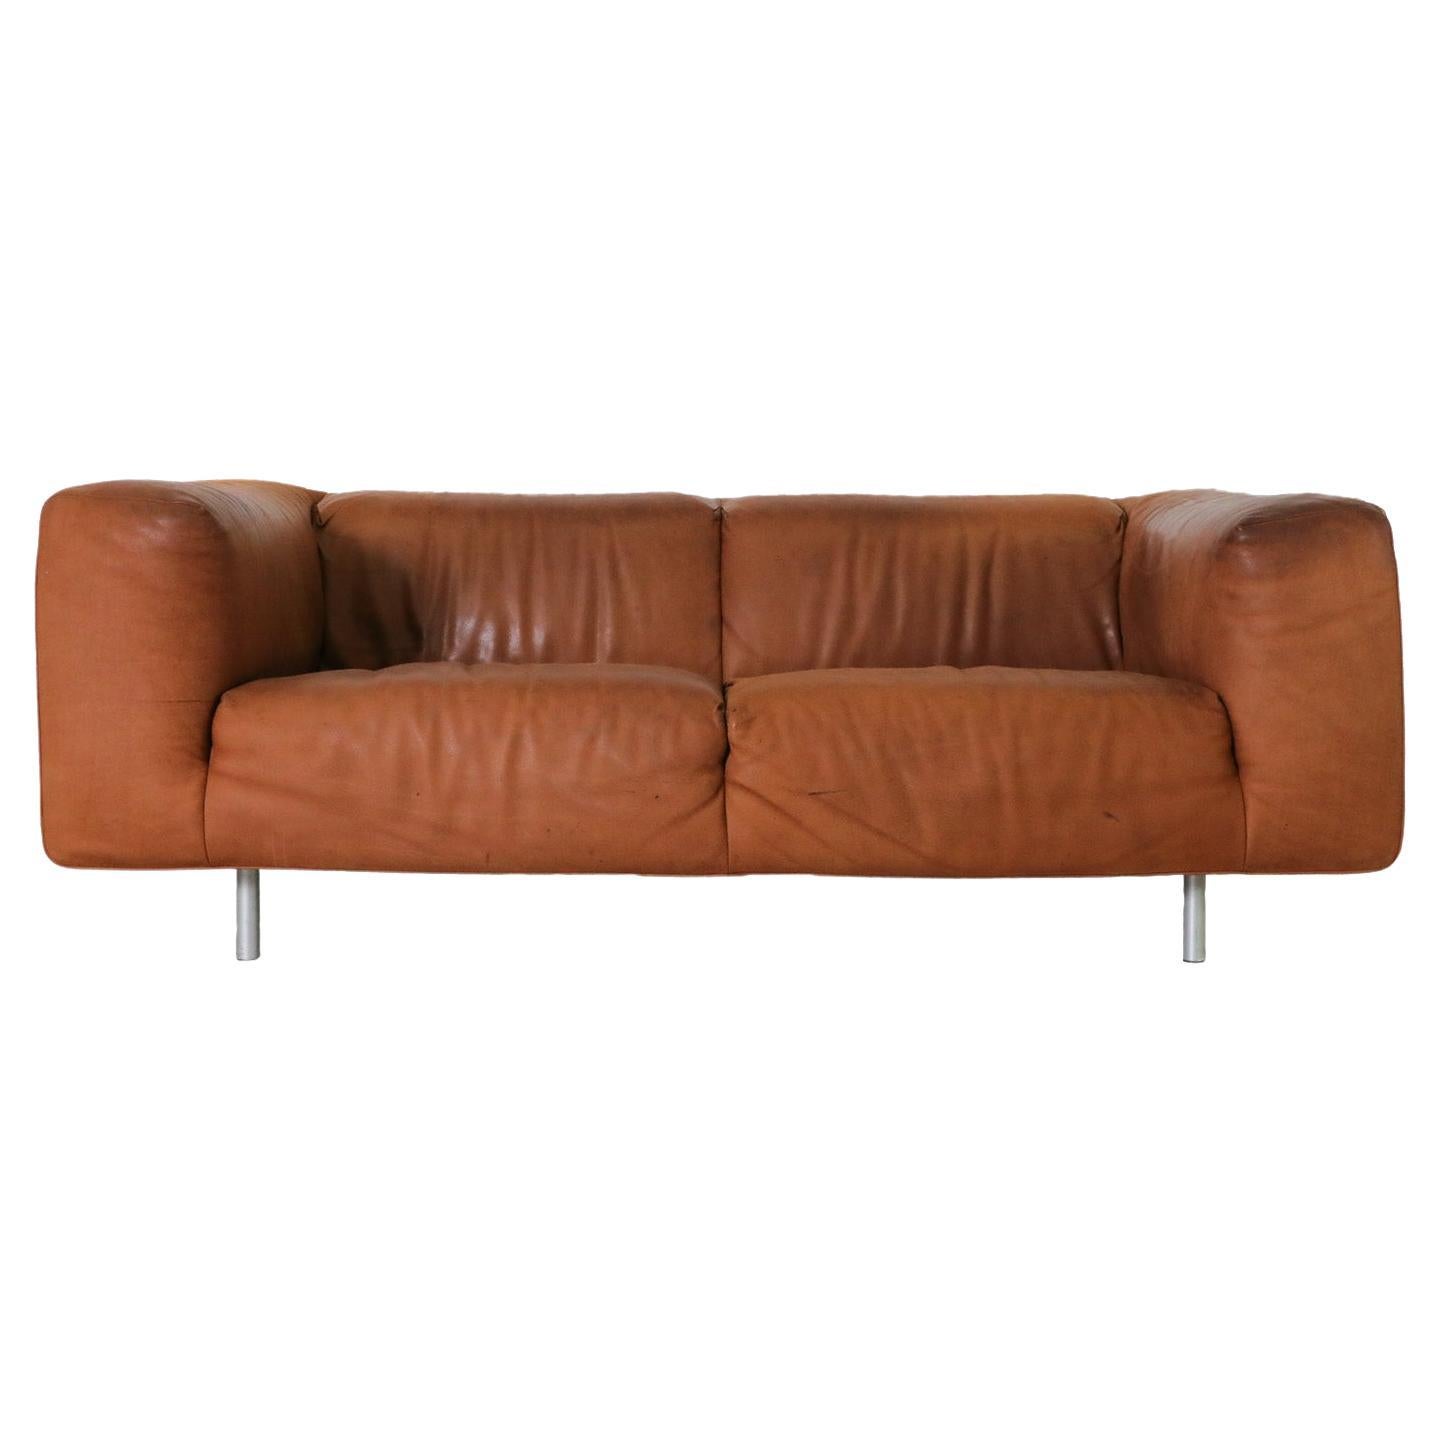 Gerard van den Berg Cognac Leather Soft Form Sofa with Aluminum Legs  For Sale